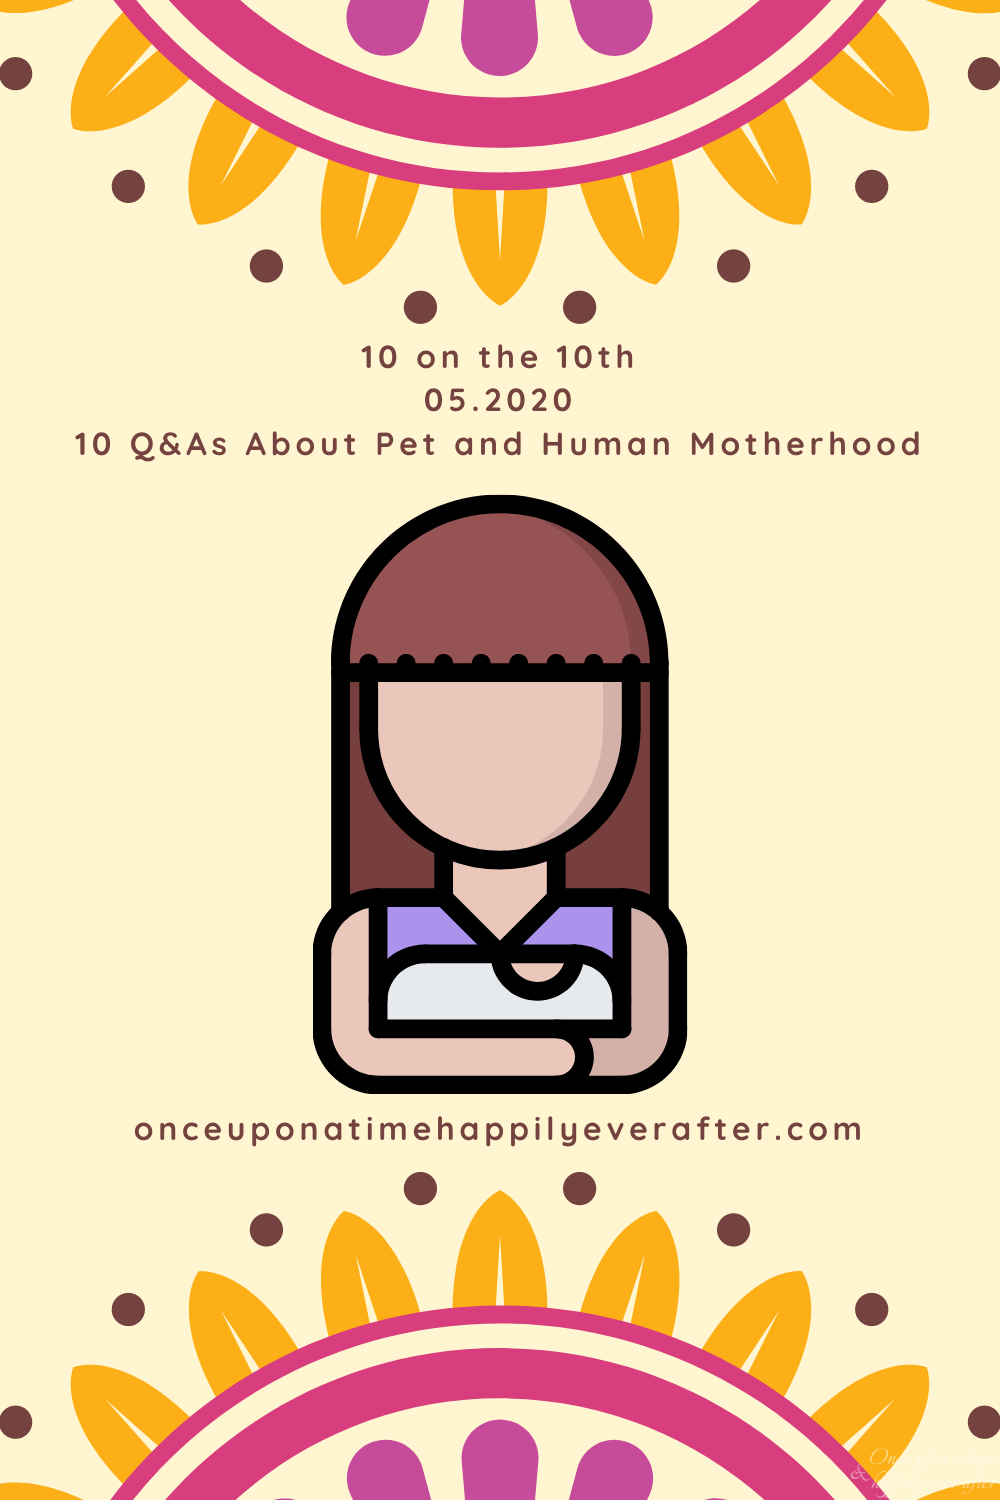 10 on the 10th 05.2020: Motherhood